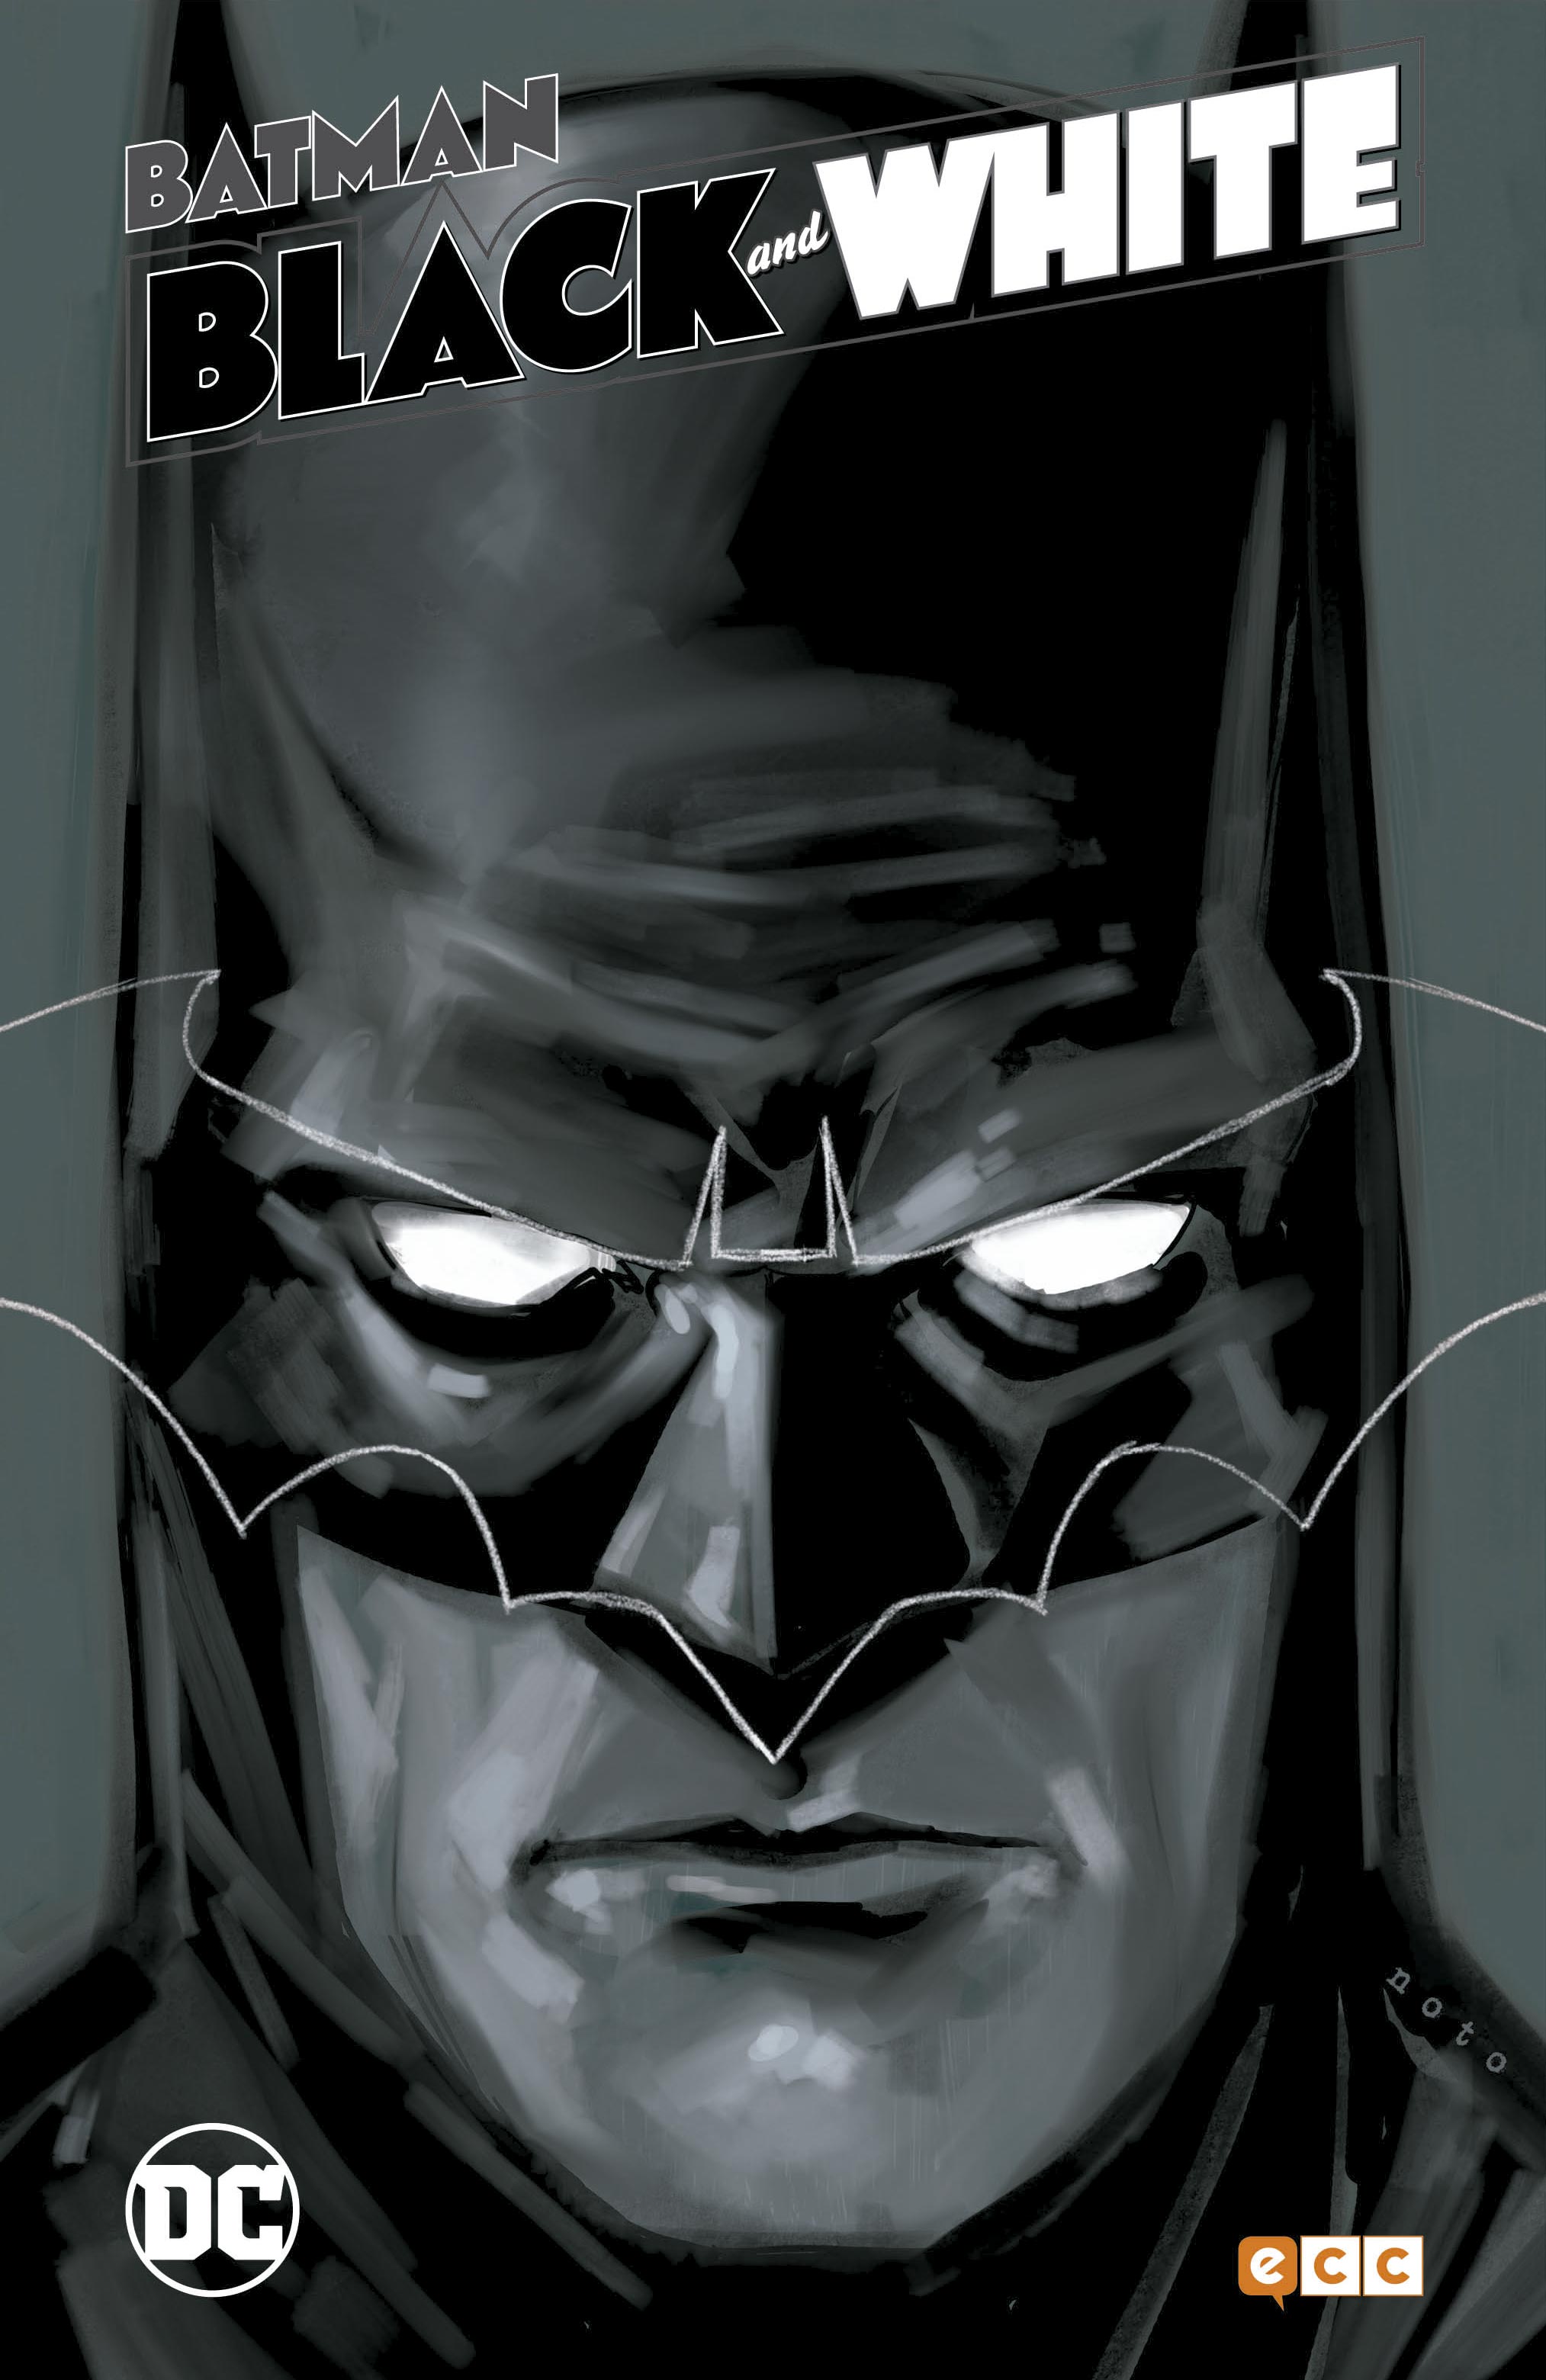 Batman black. Бэтмен комикс. Черный Бэтмен. Черный Бэтмен комикс. Бэтмен рисунок.